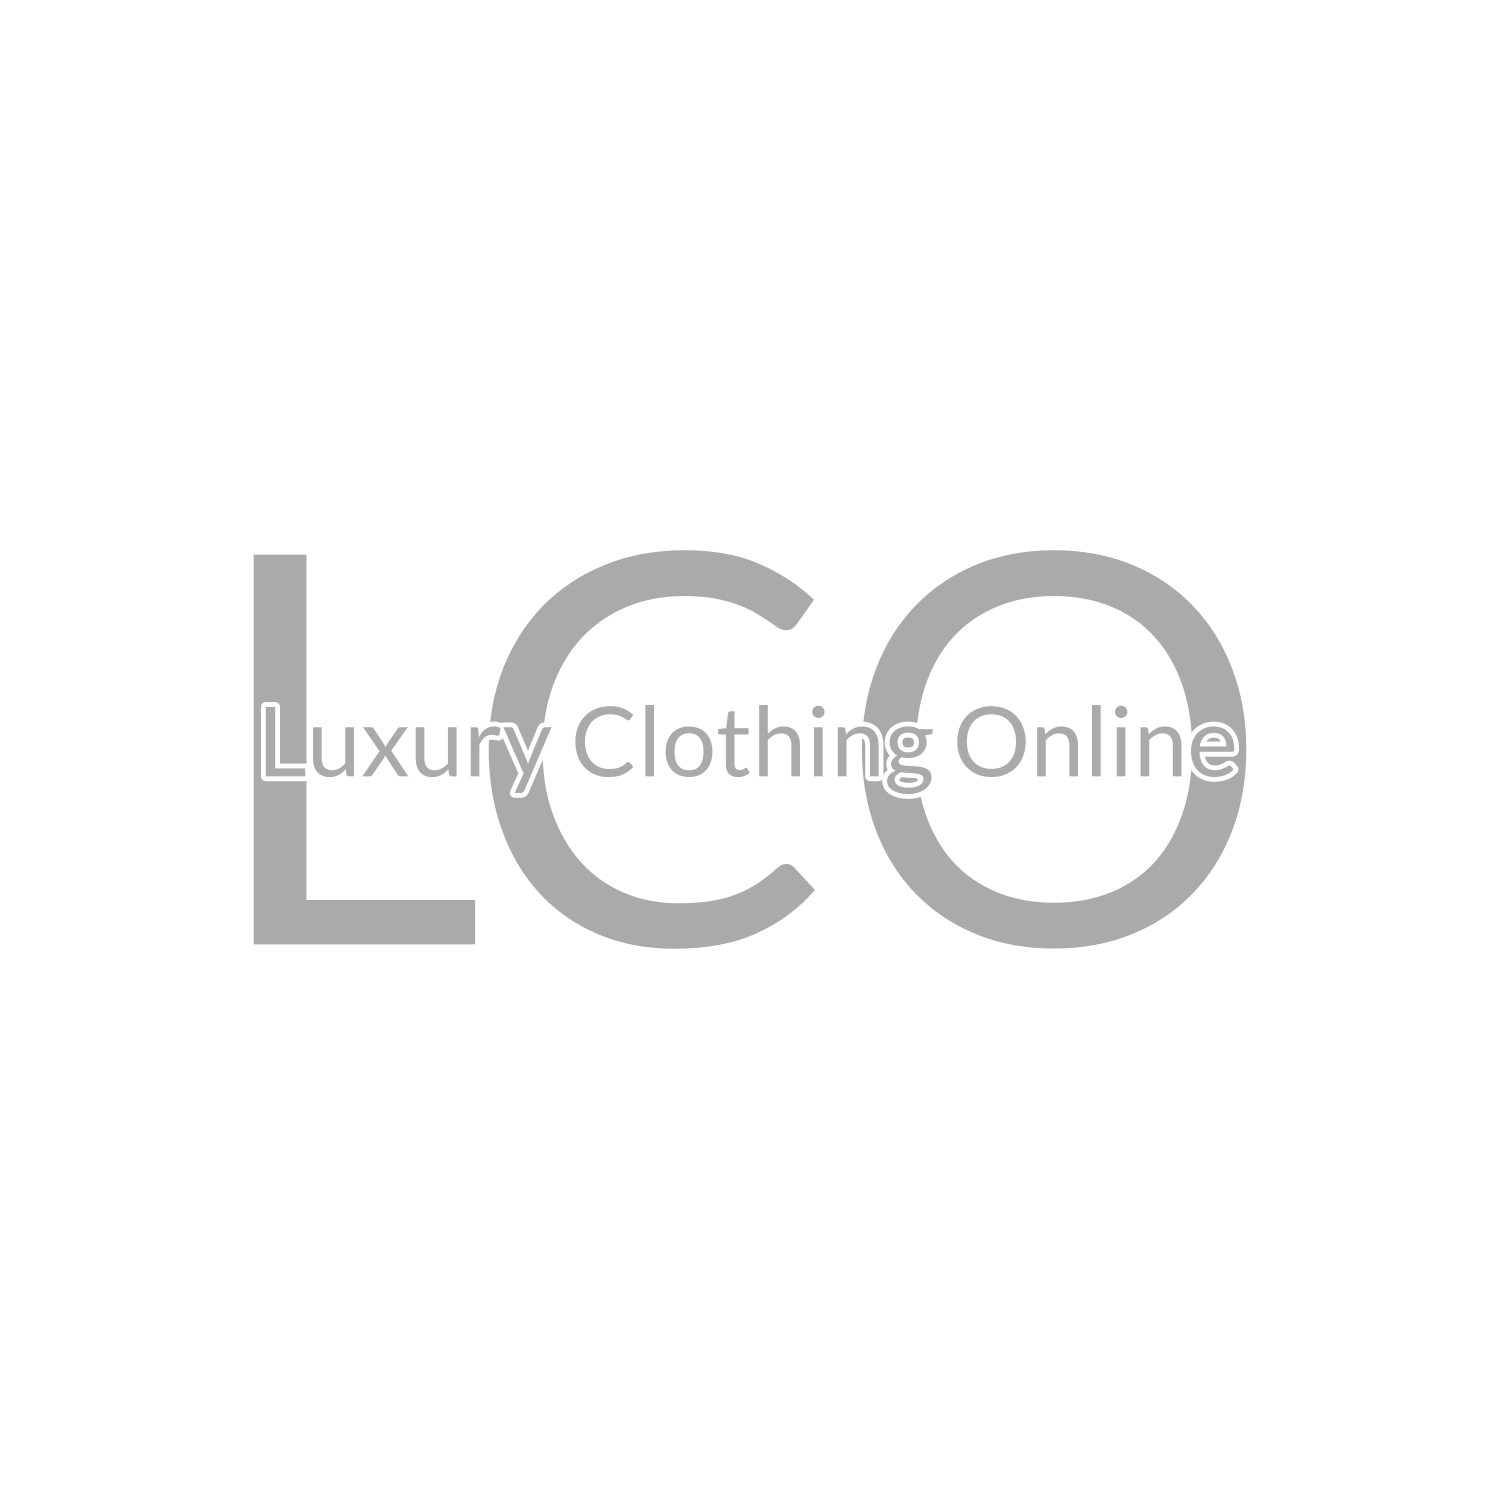 Luxury Clothing Online